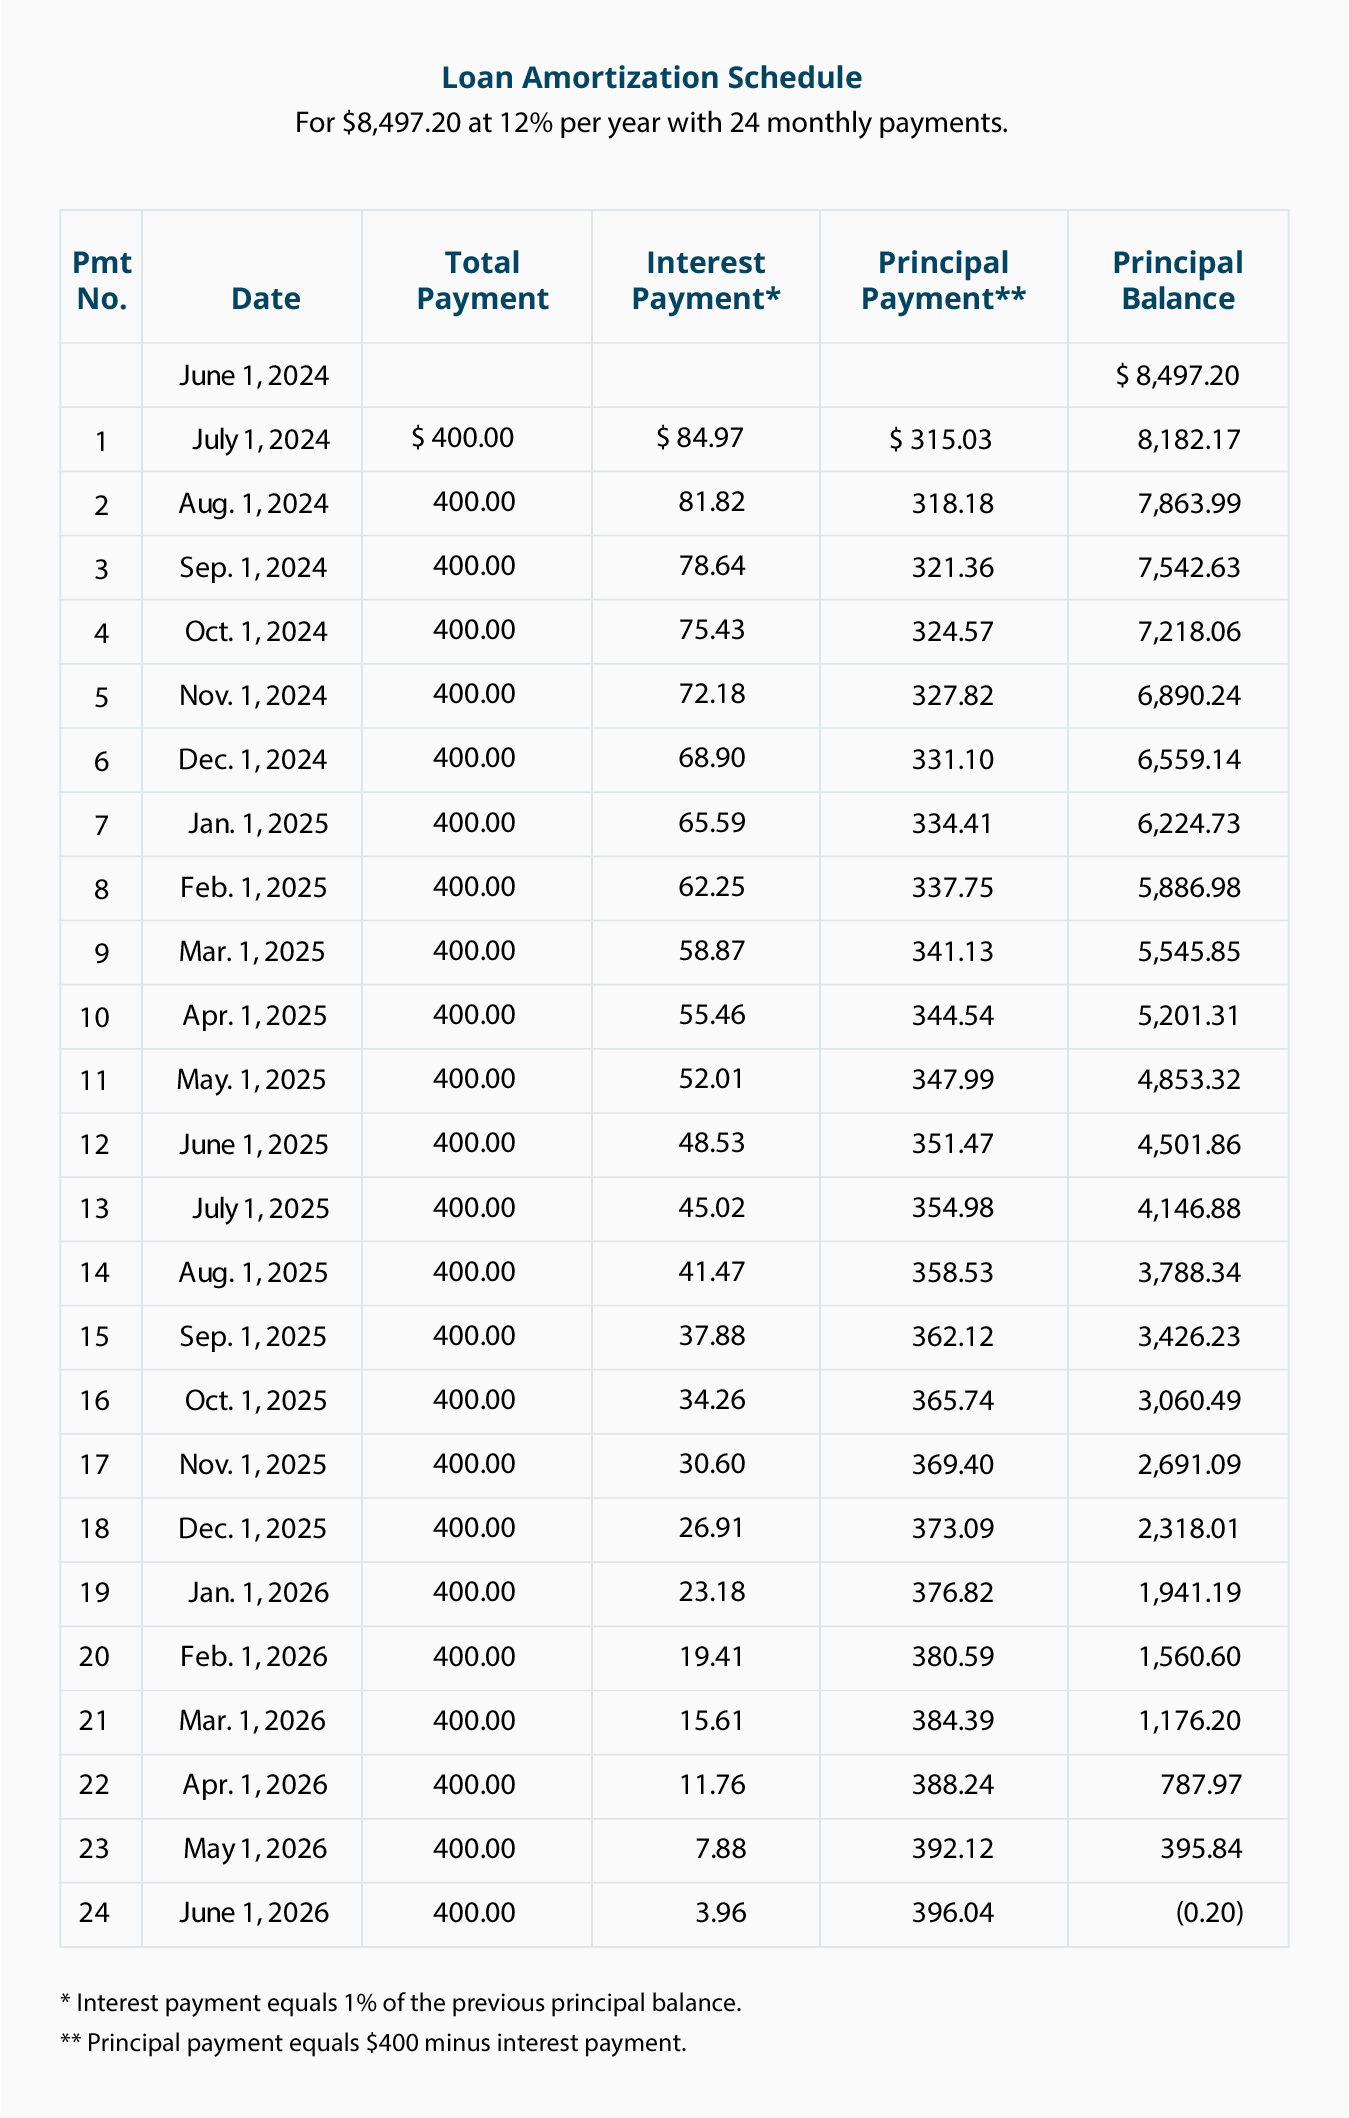 Loan Progress Chart Calculator